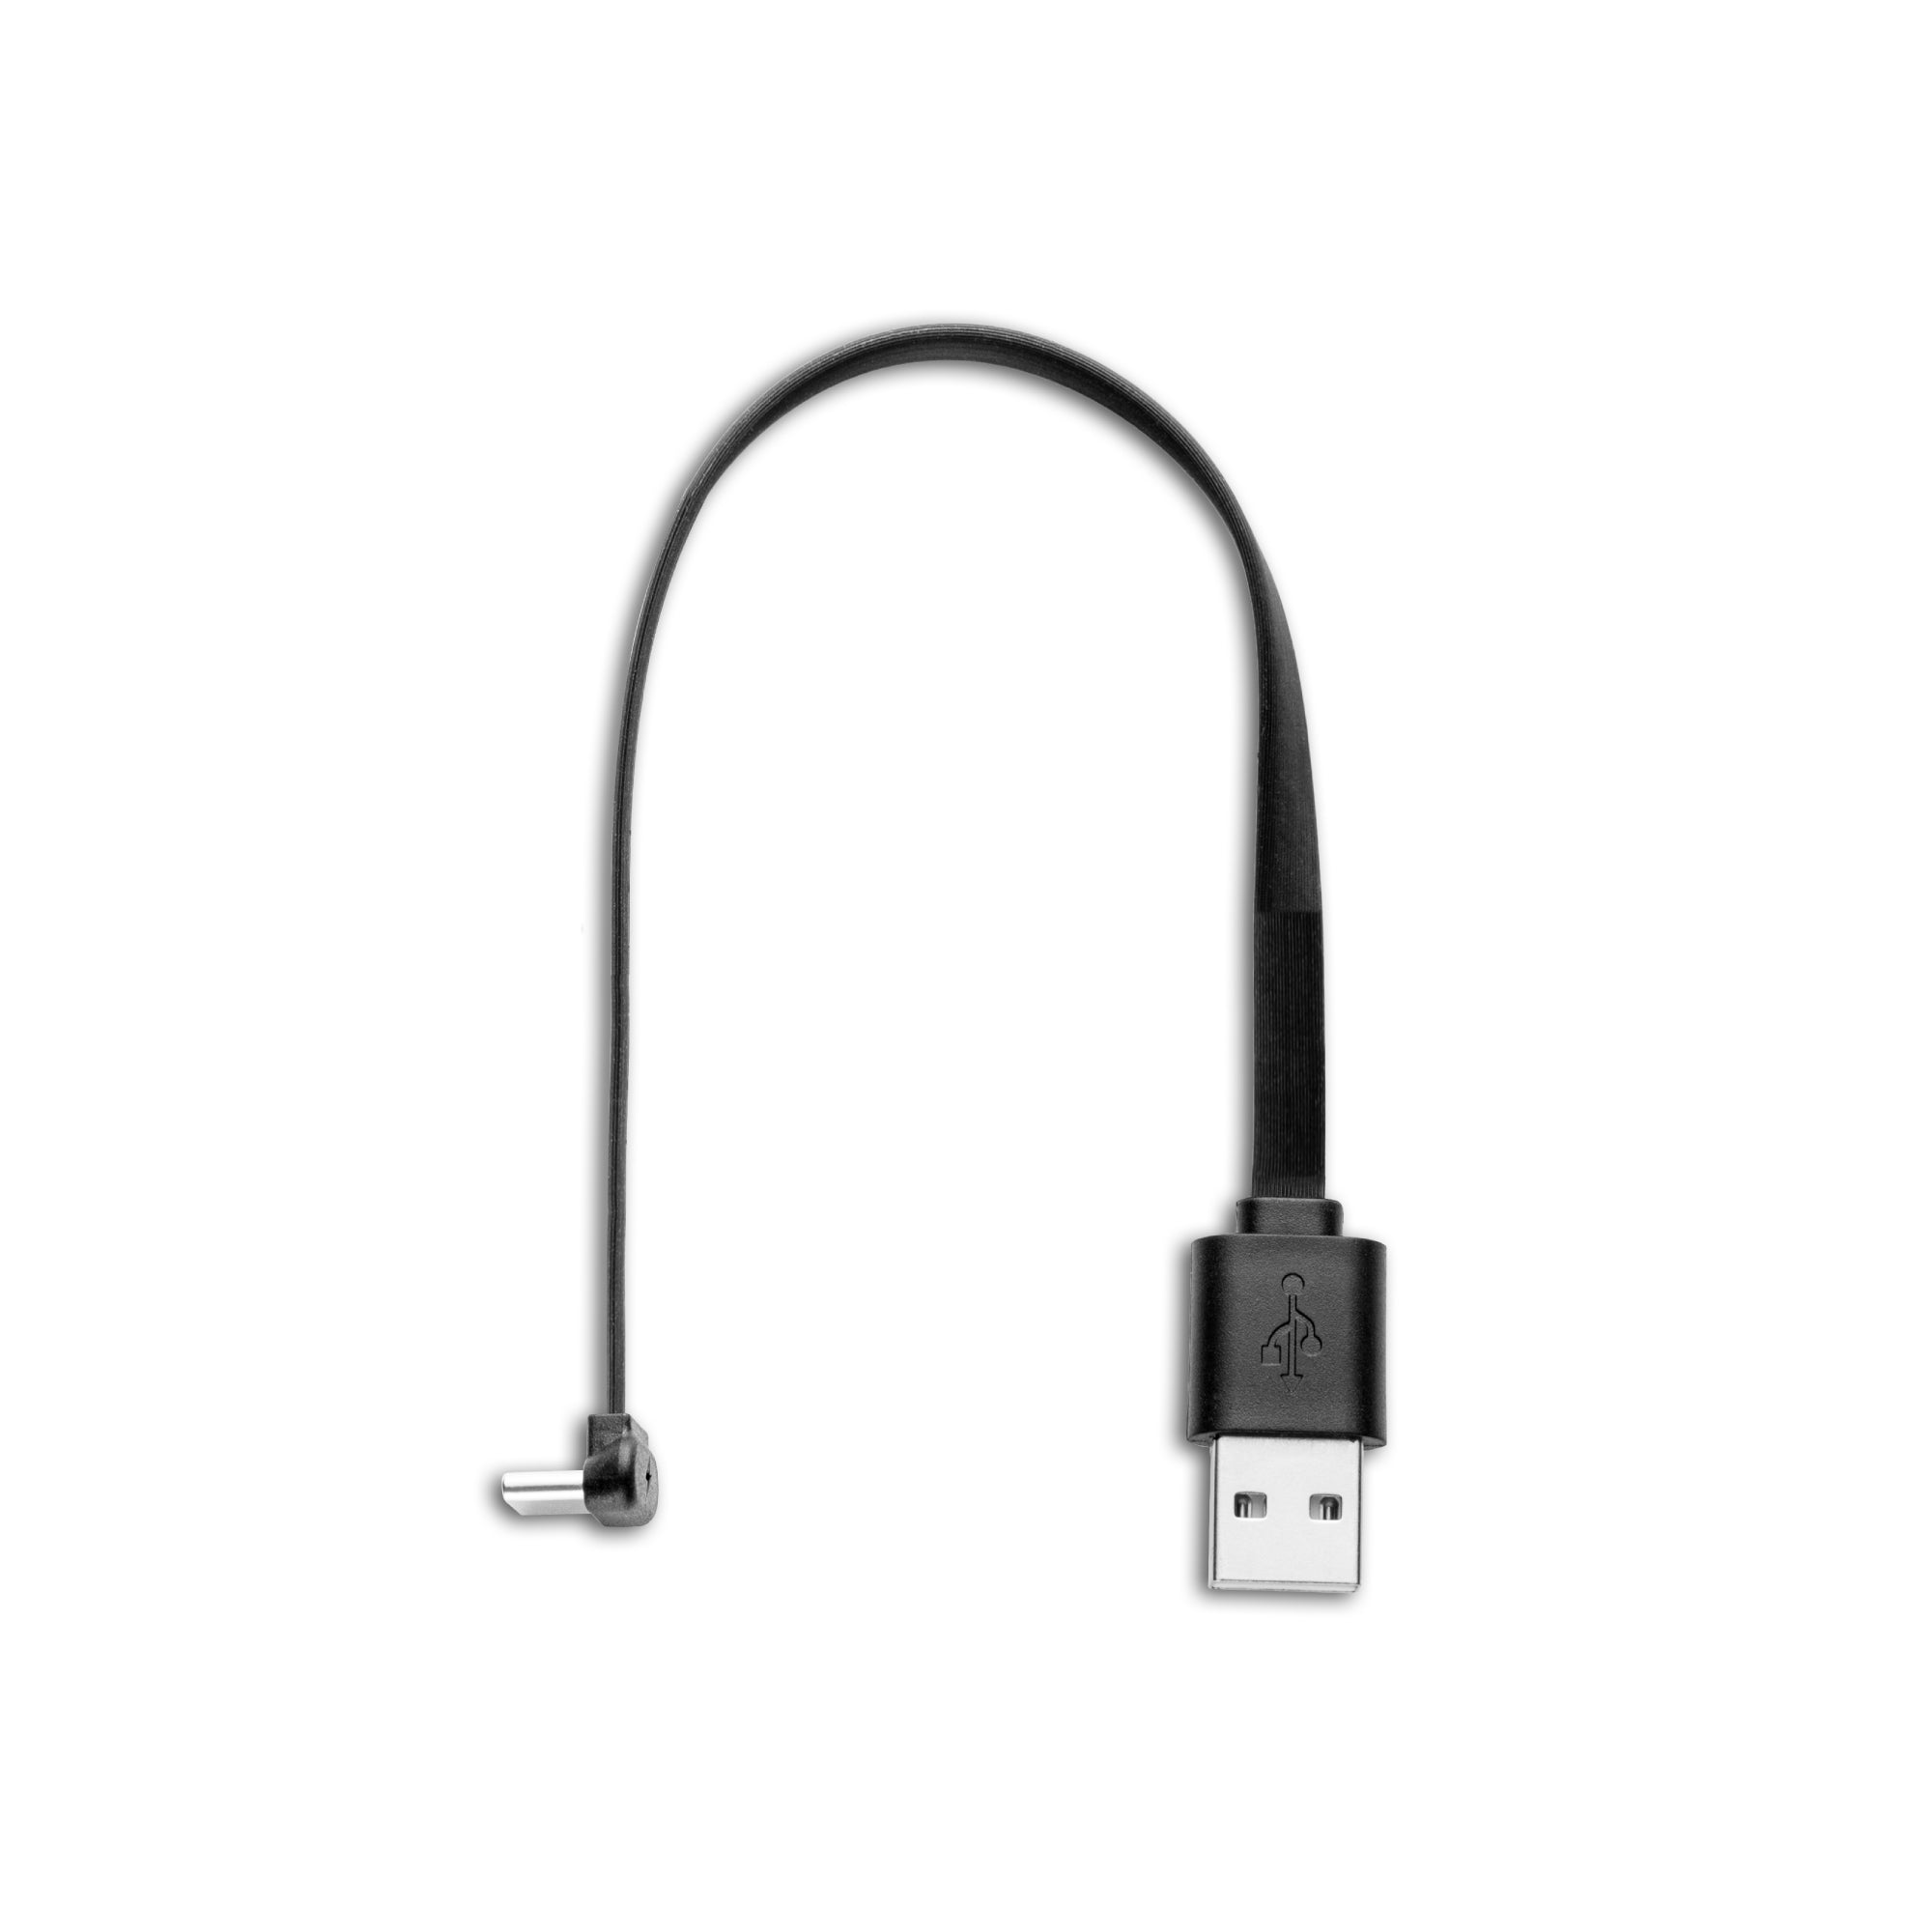 Displine USB-C to USB-A cable